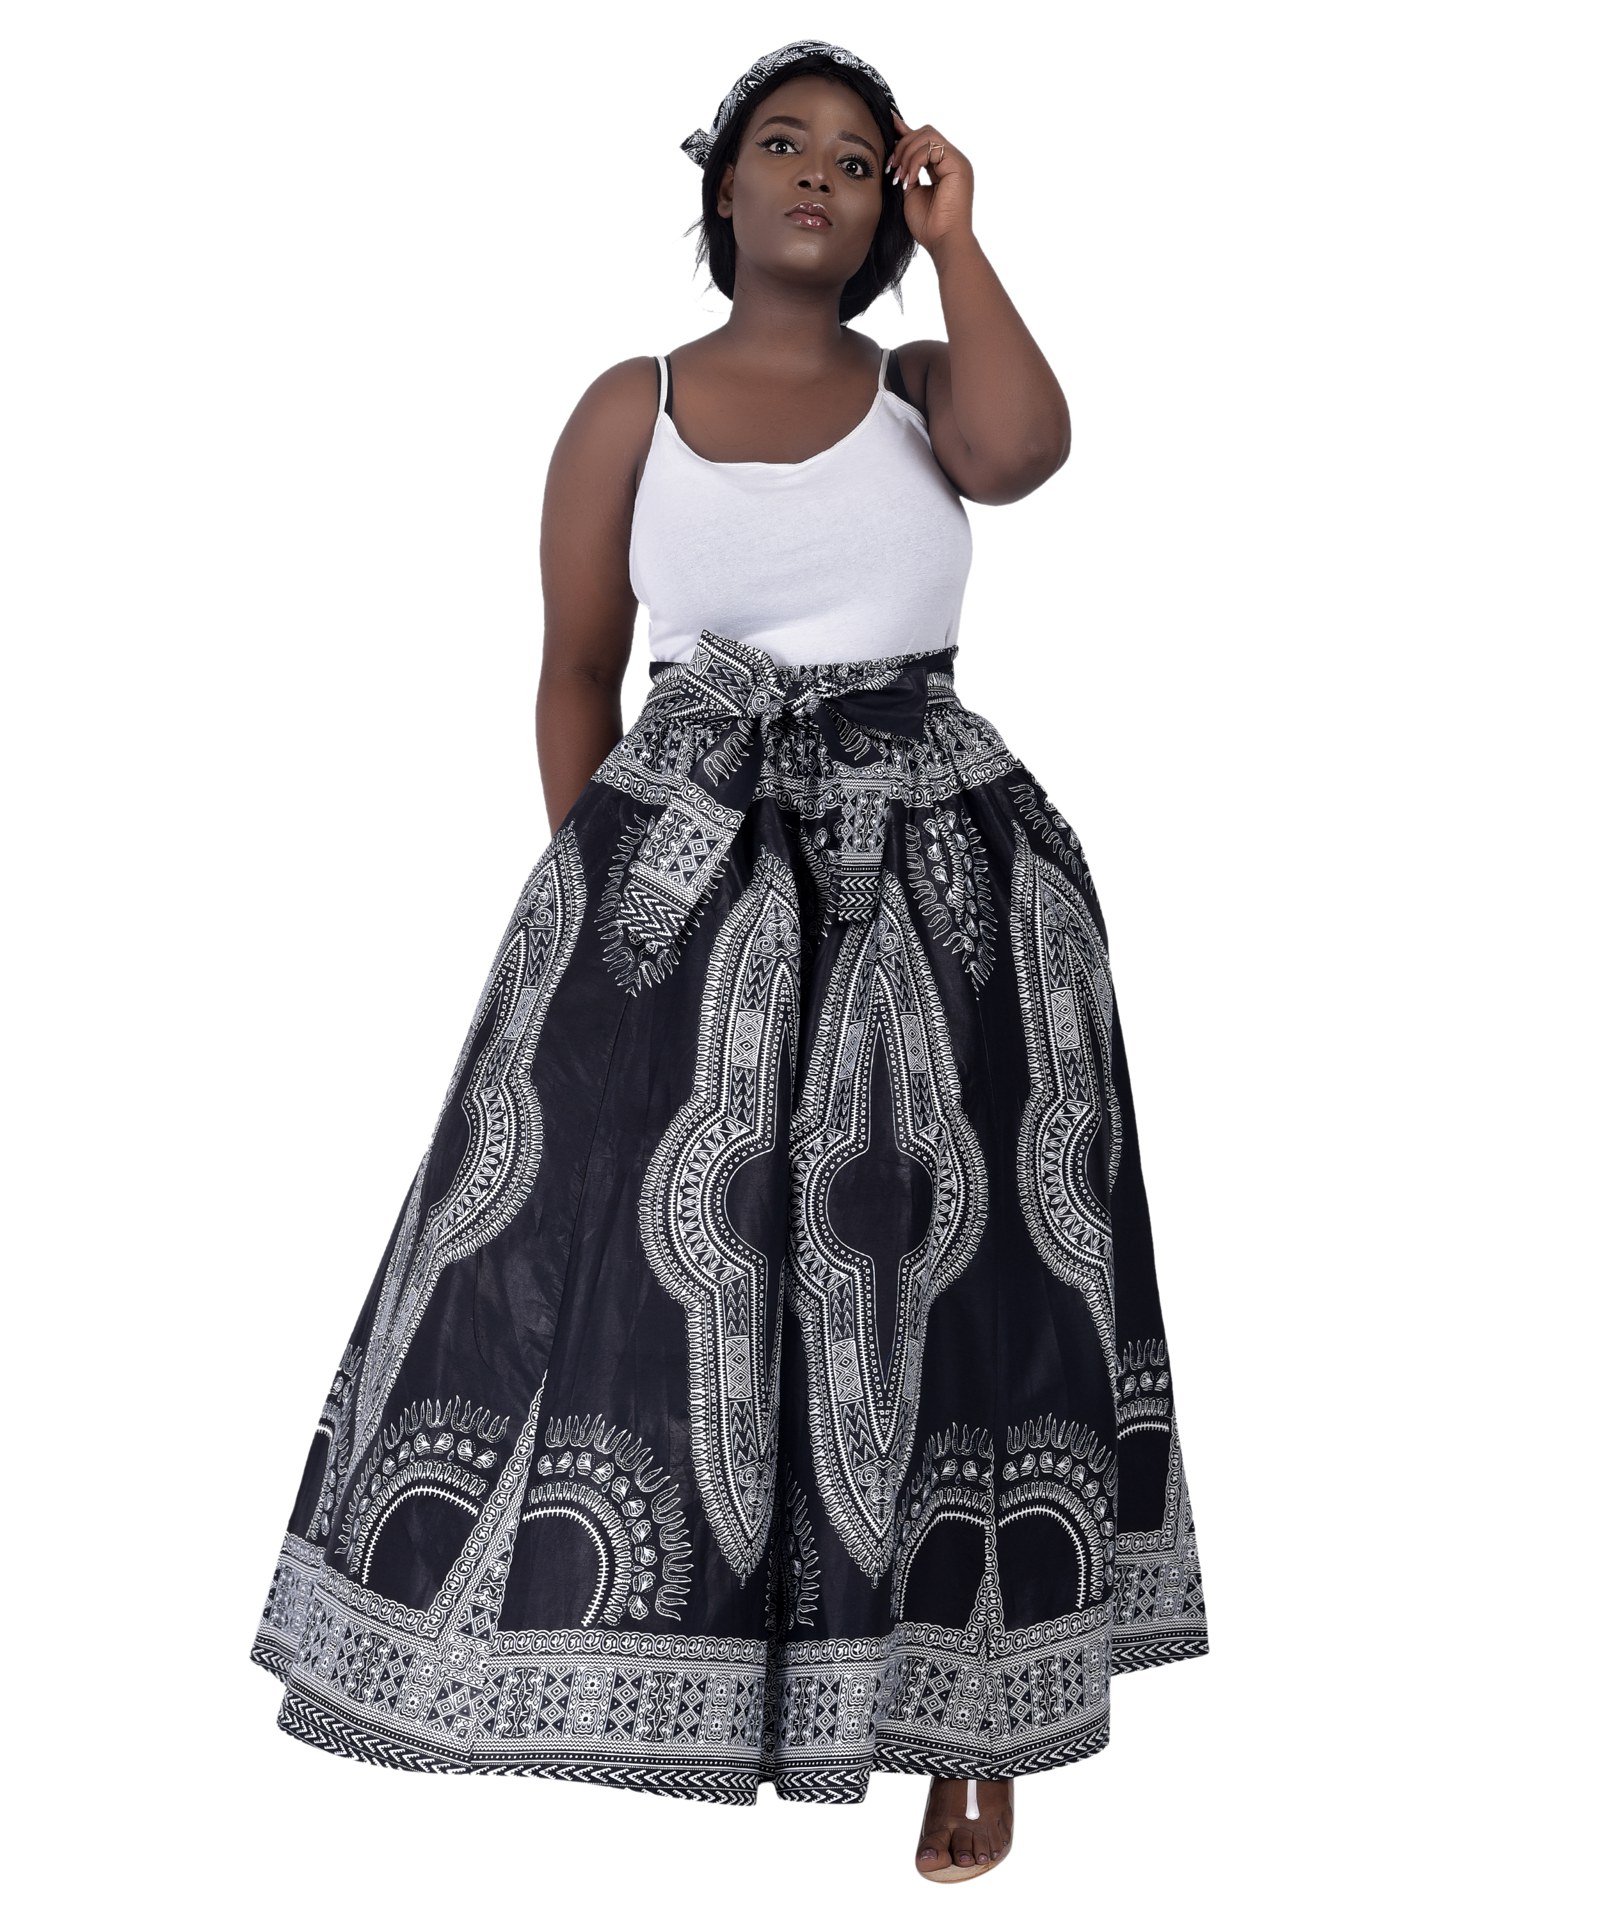 African print Skirt in Dashiki Wax Print